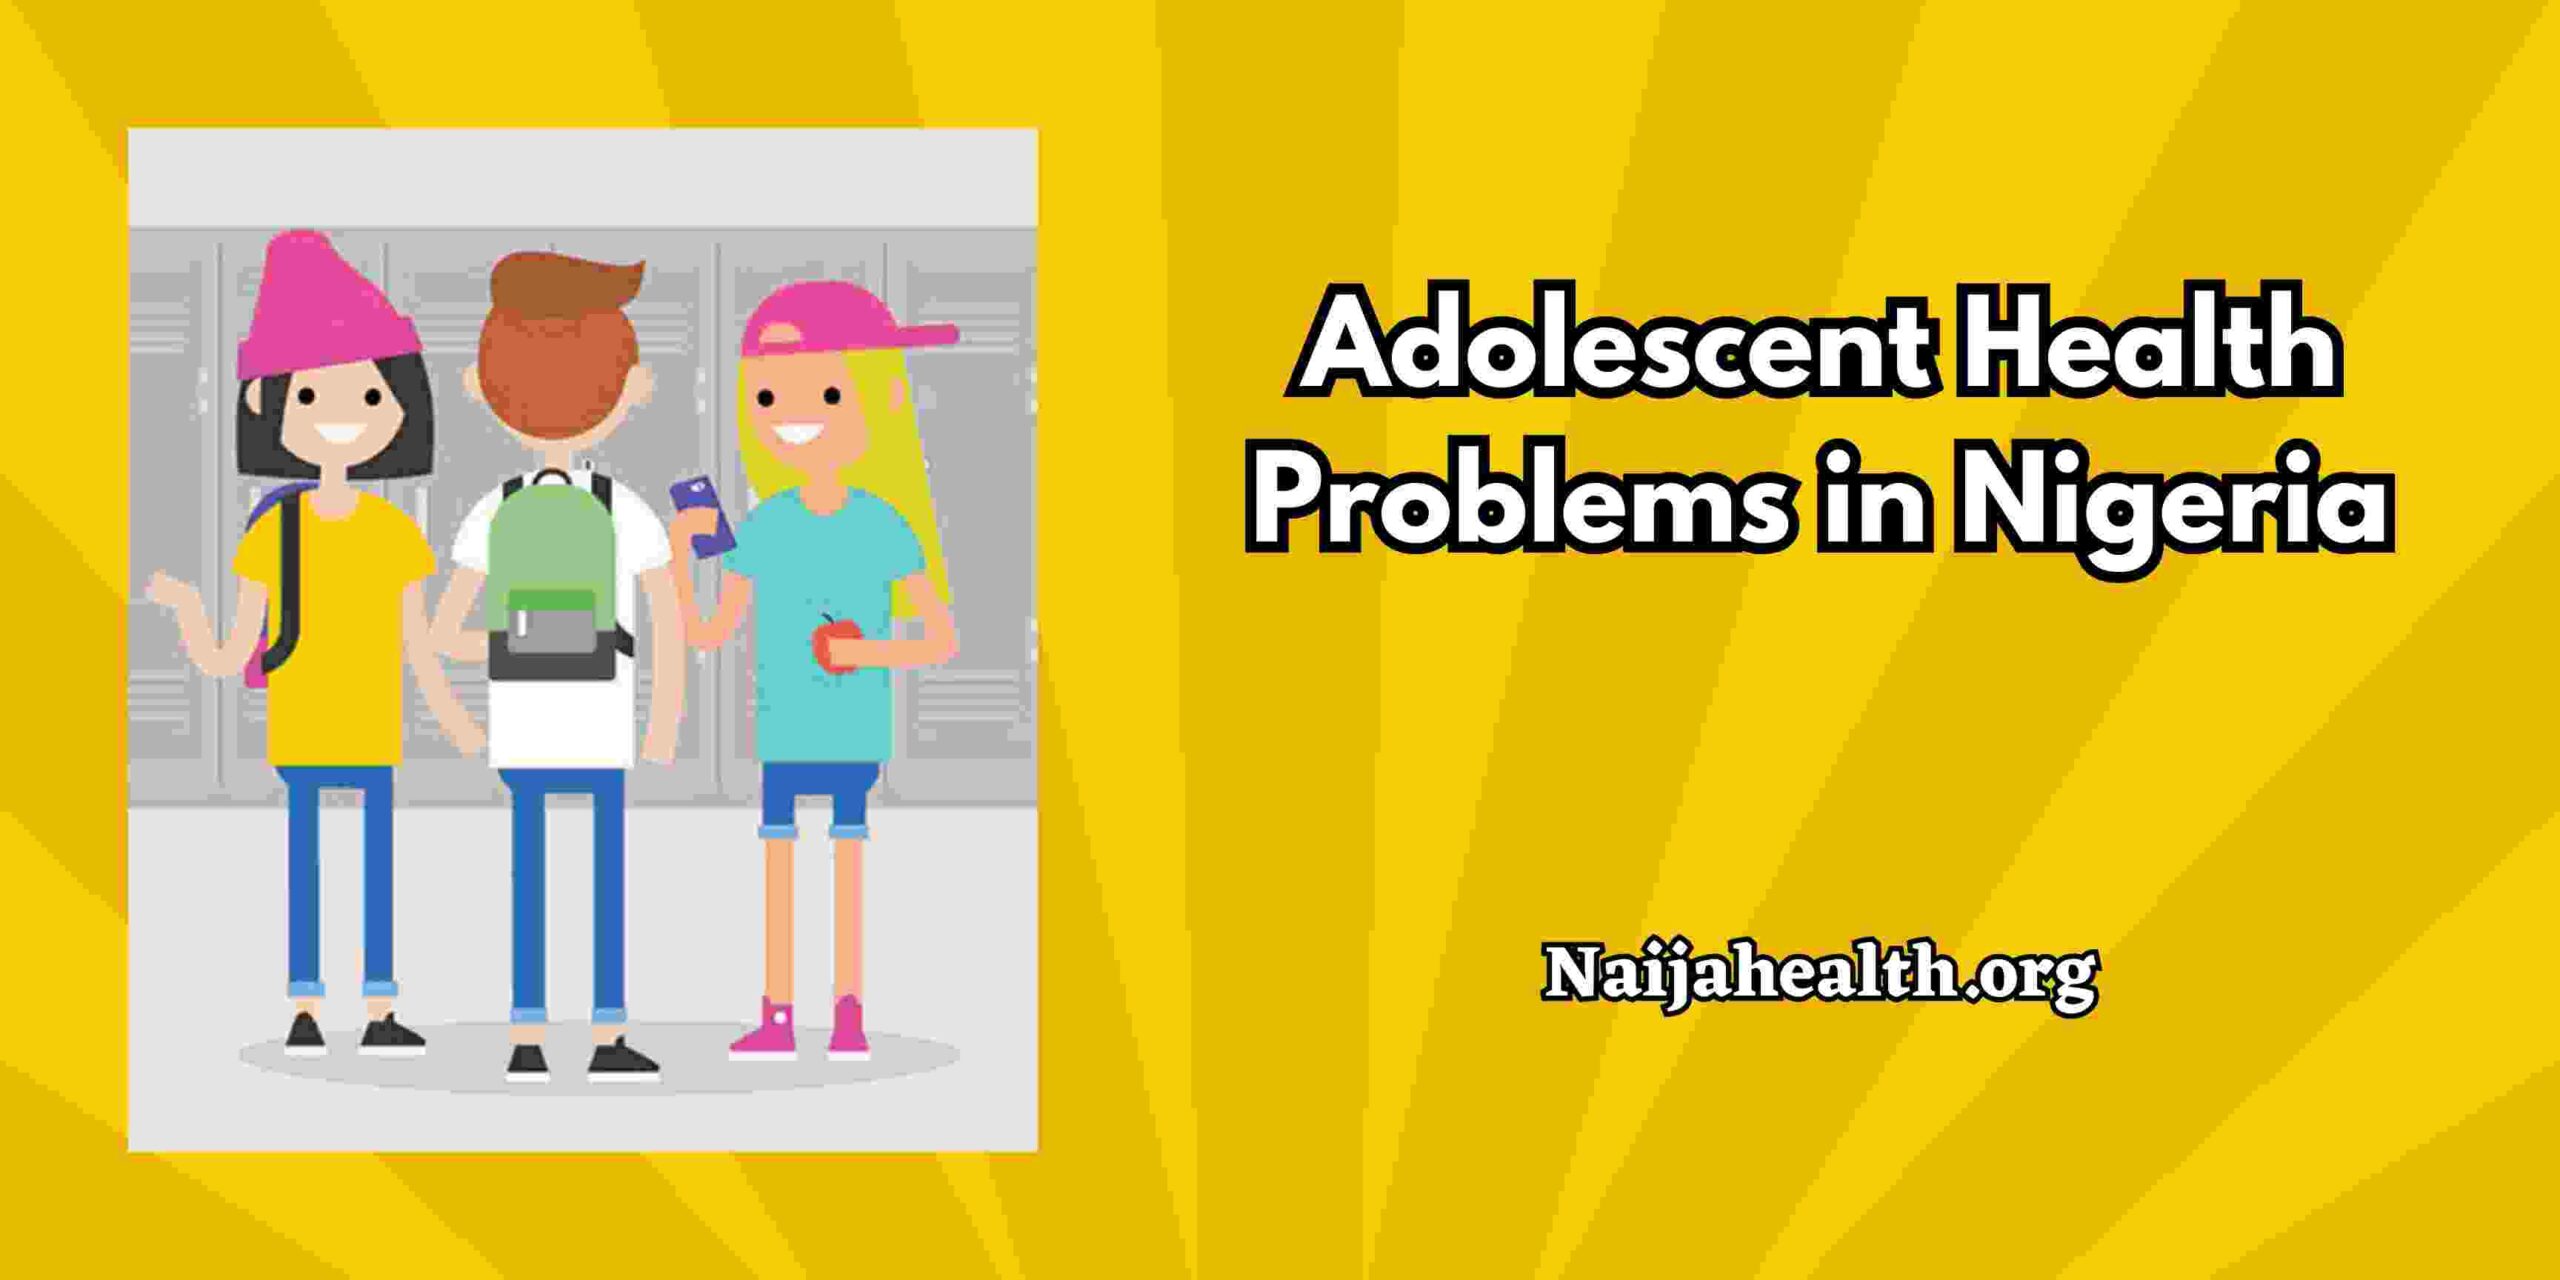 Adolescent Health Problems in Nigeria